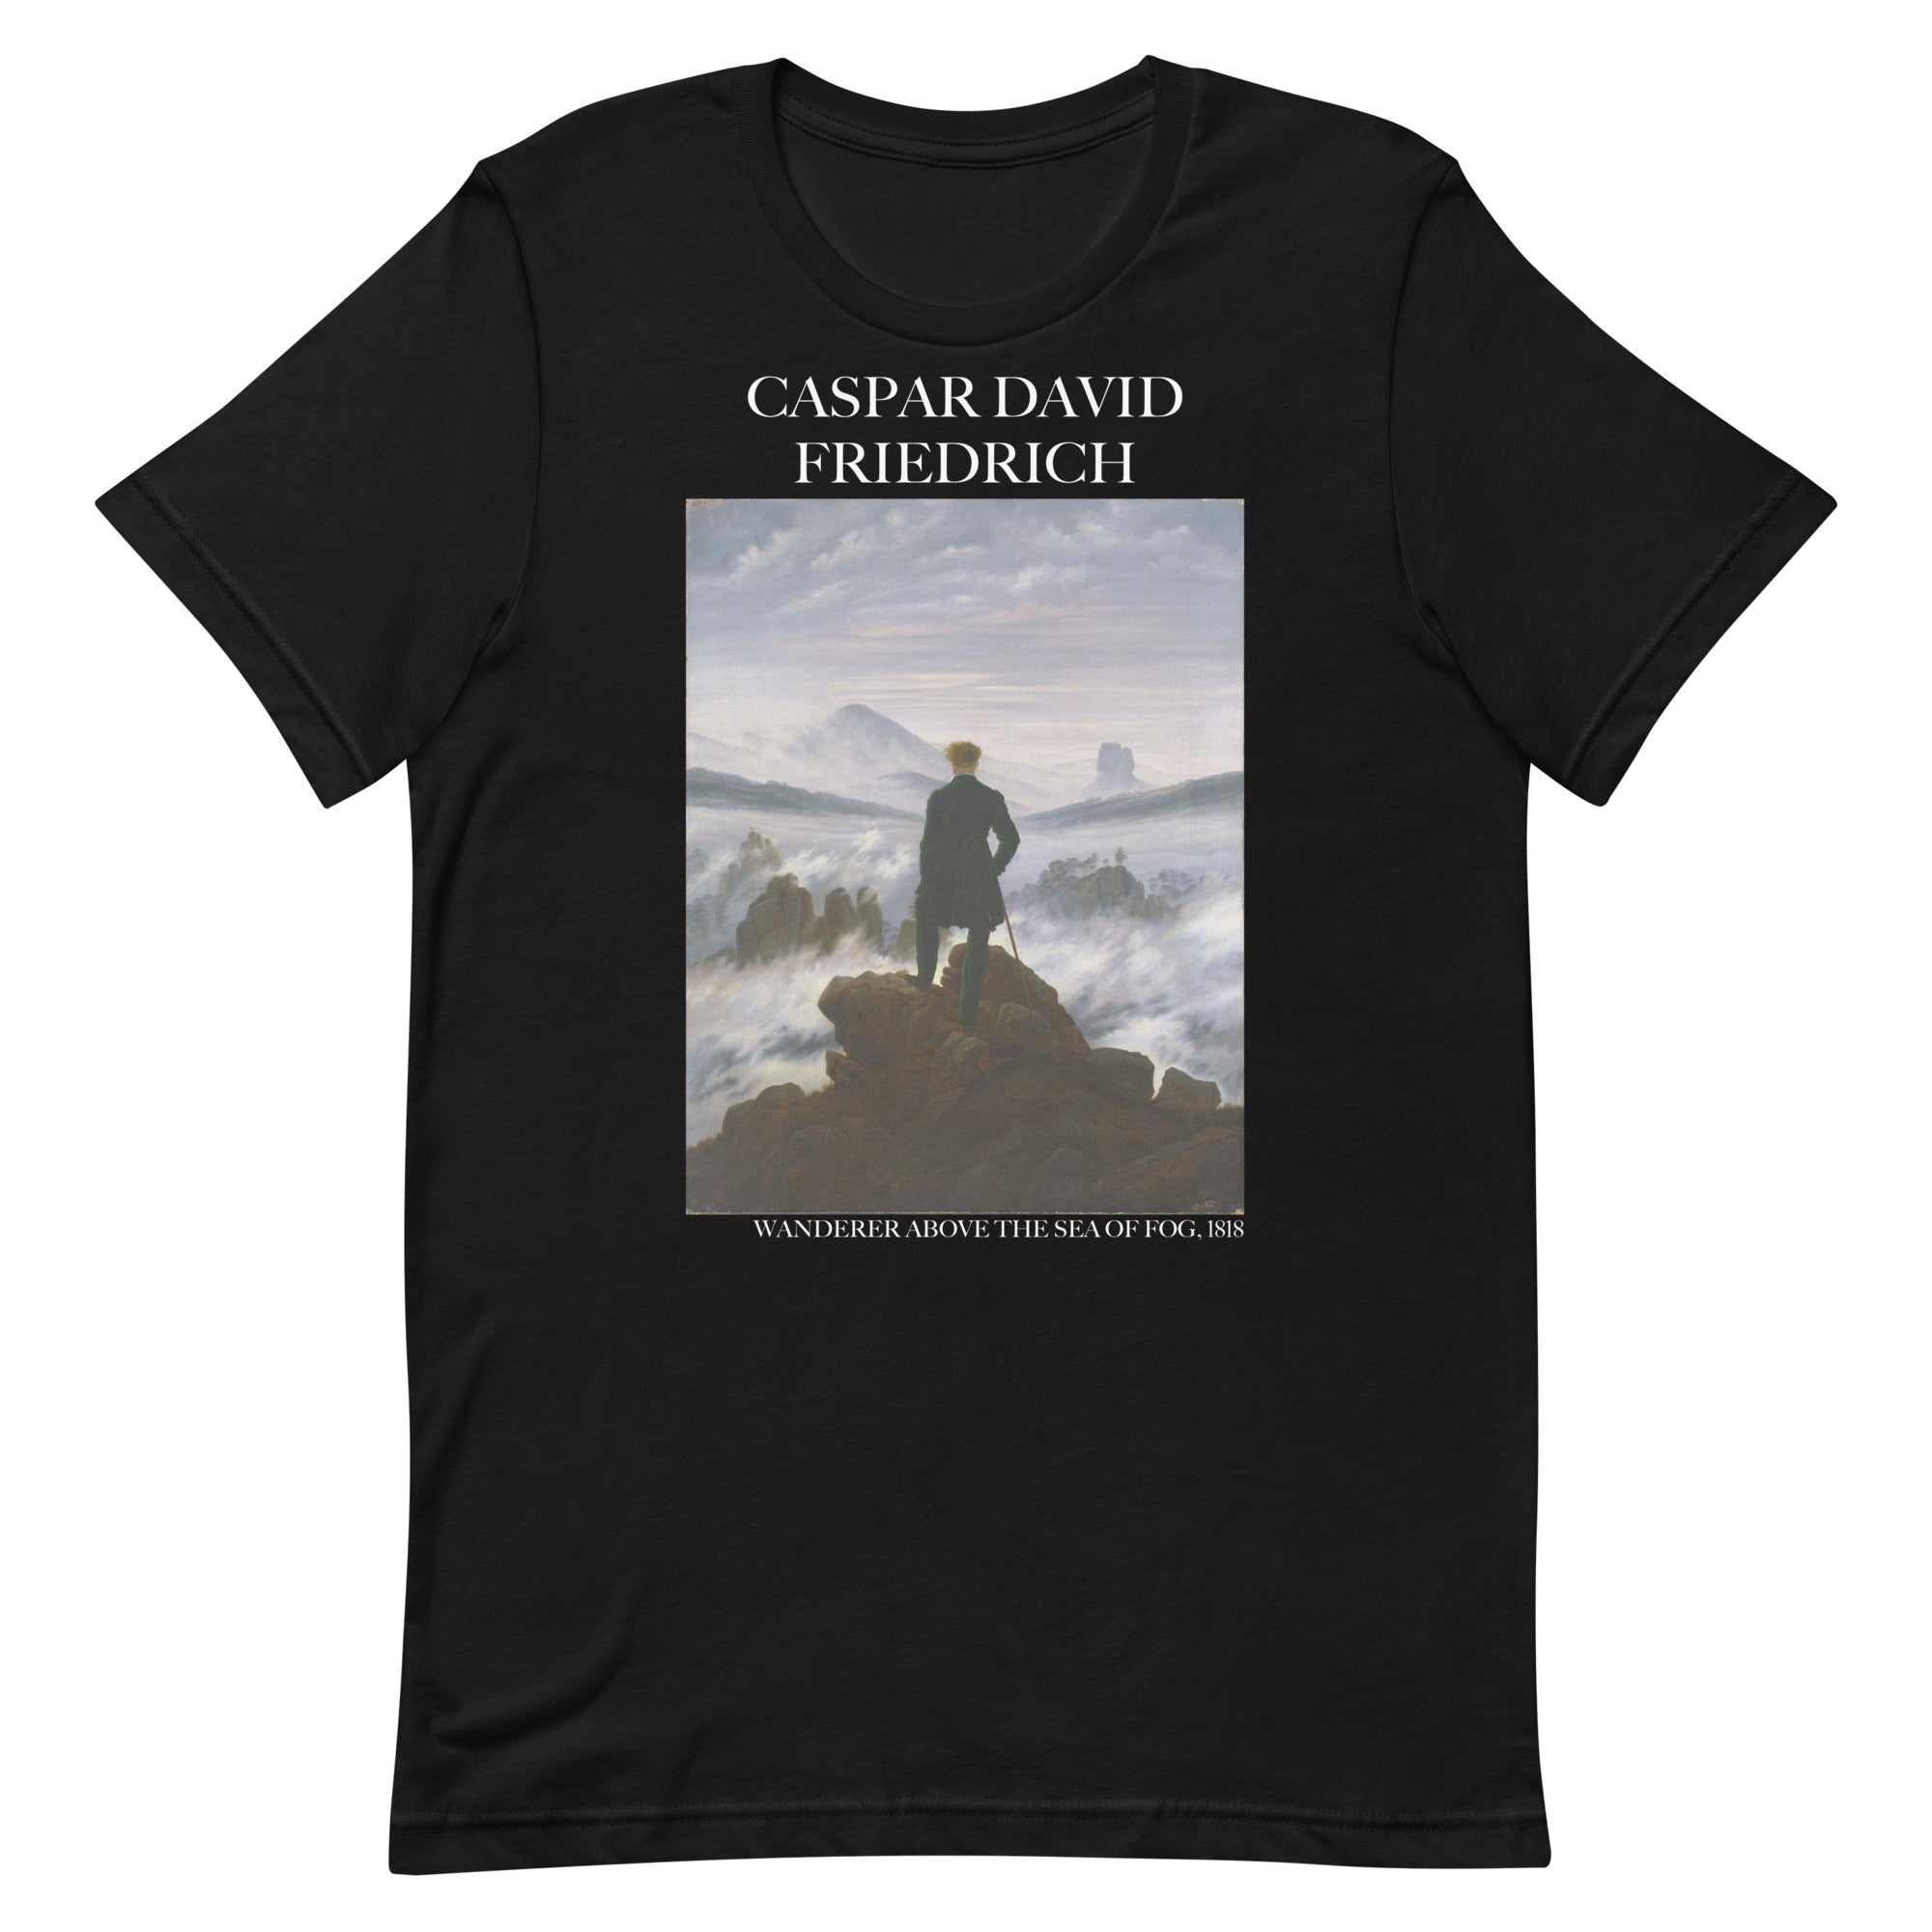 Caspar David Friedrich 'Wanderer Above the Sea of Fog' Famous Painting T-Shirt | Unisex Classic Art Tee